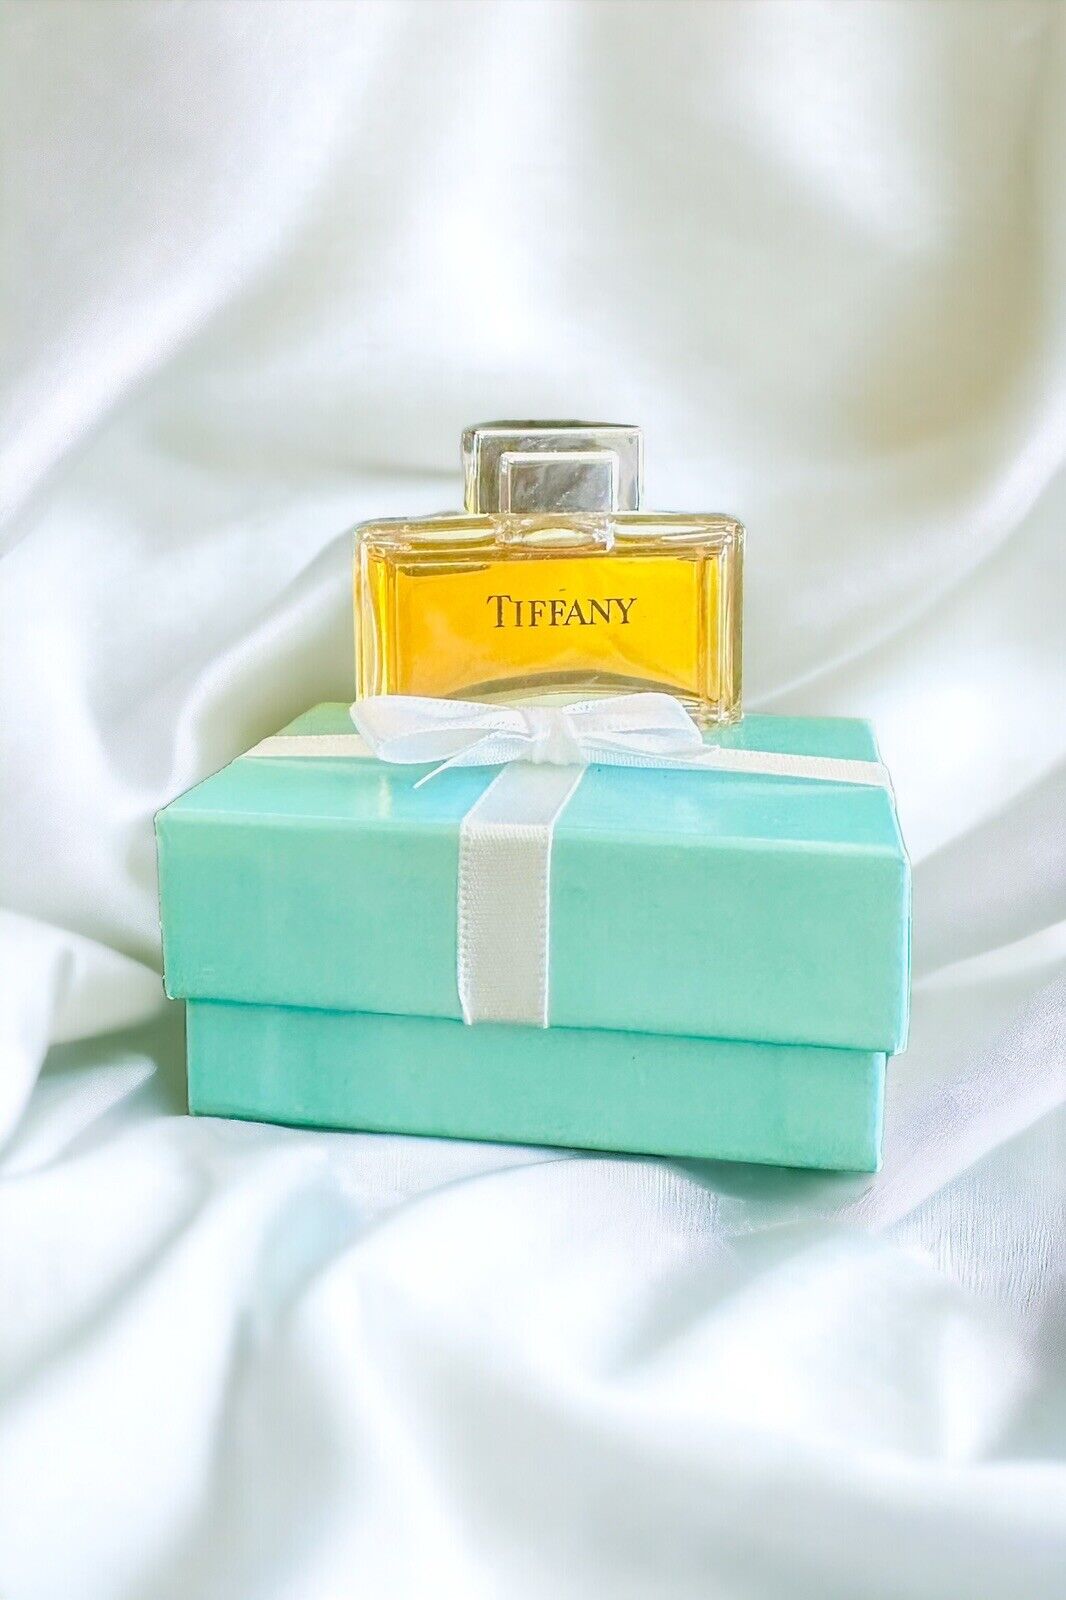 Tiffany by Tiffany & Co. 0.25 oz / 7.5 ml eau de parfum splash mini Vintage